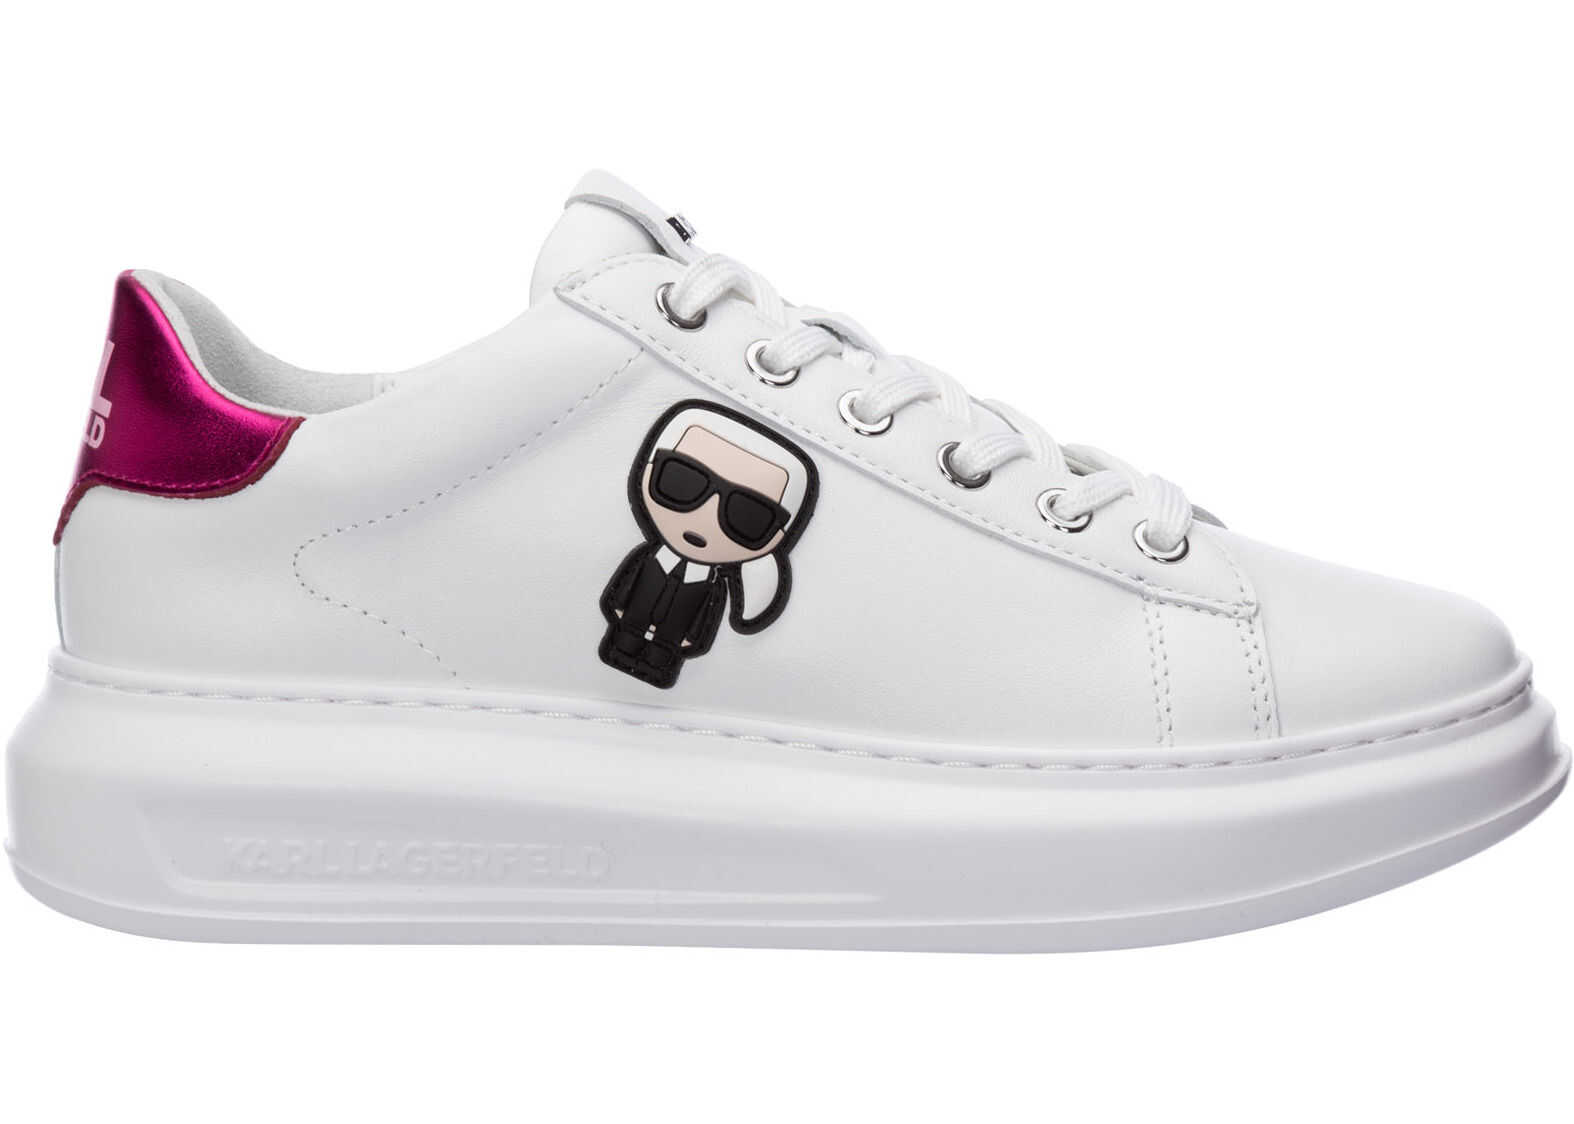 Karl Lagerfeld Shoes Leather Trainers Sneakers K/Ikonik Kapri KLL62530 Pink